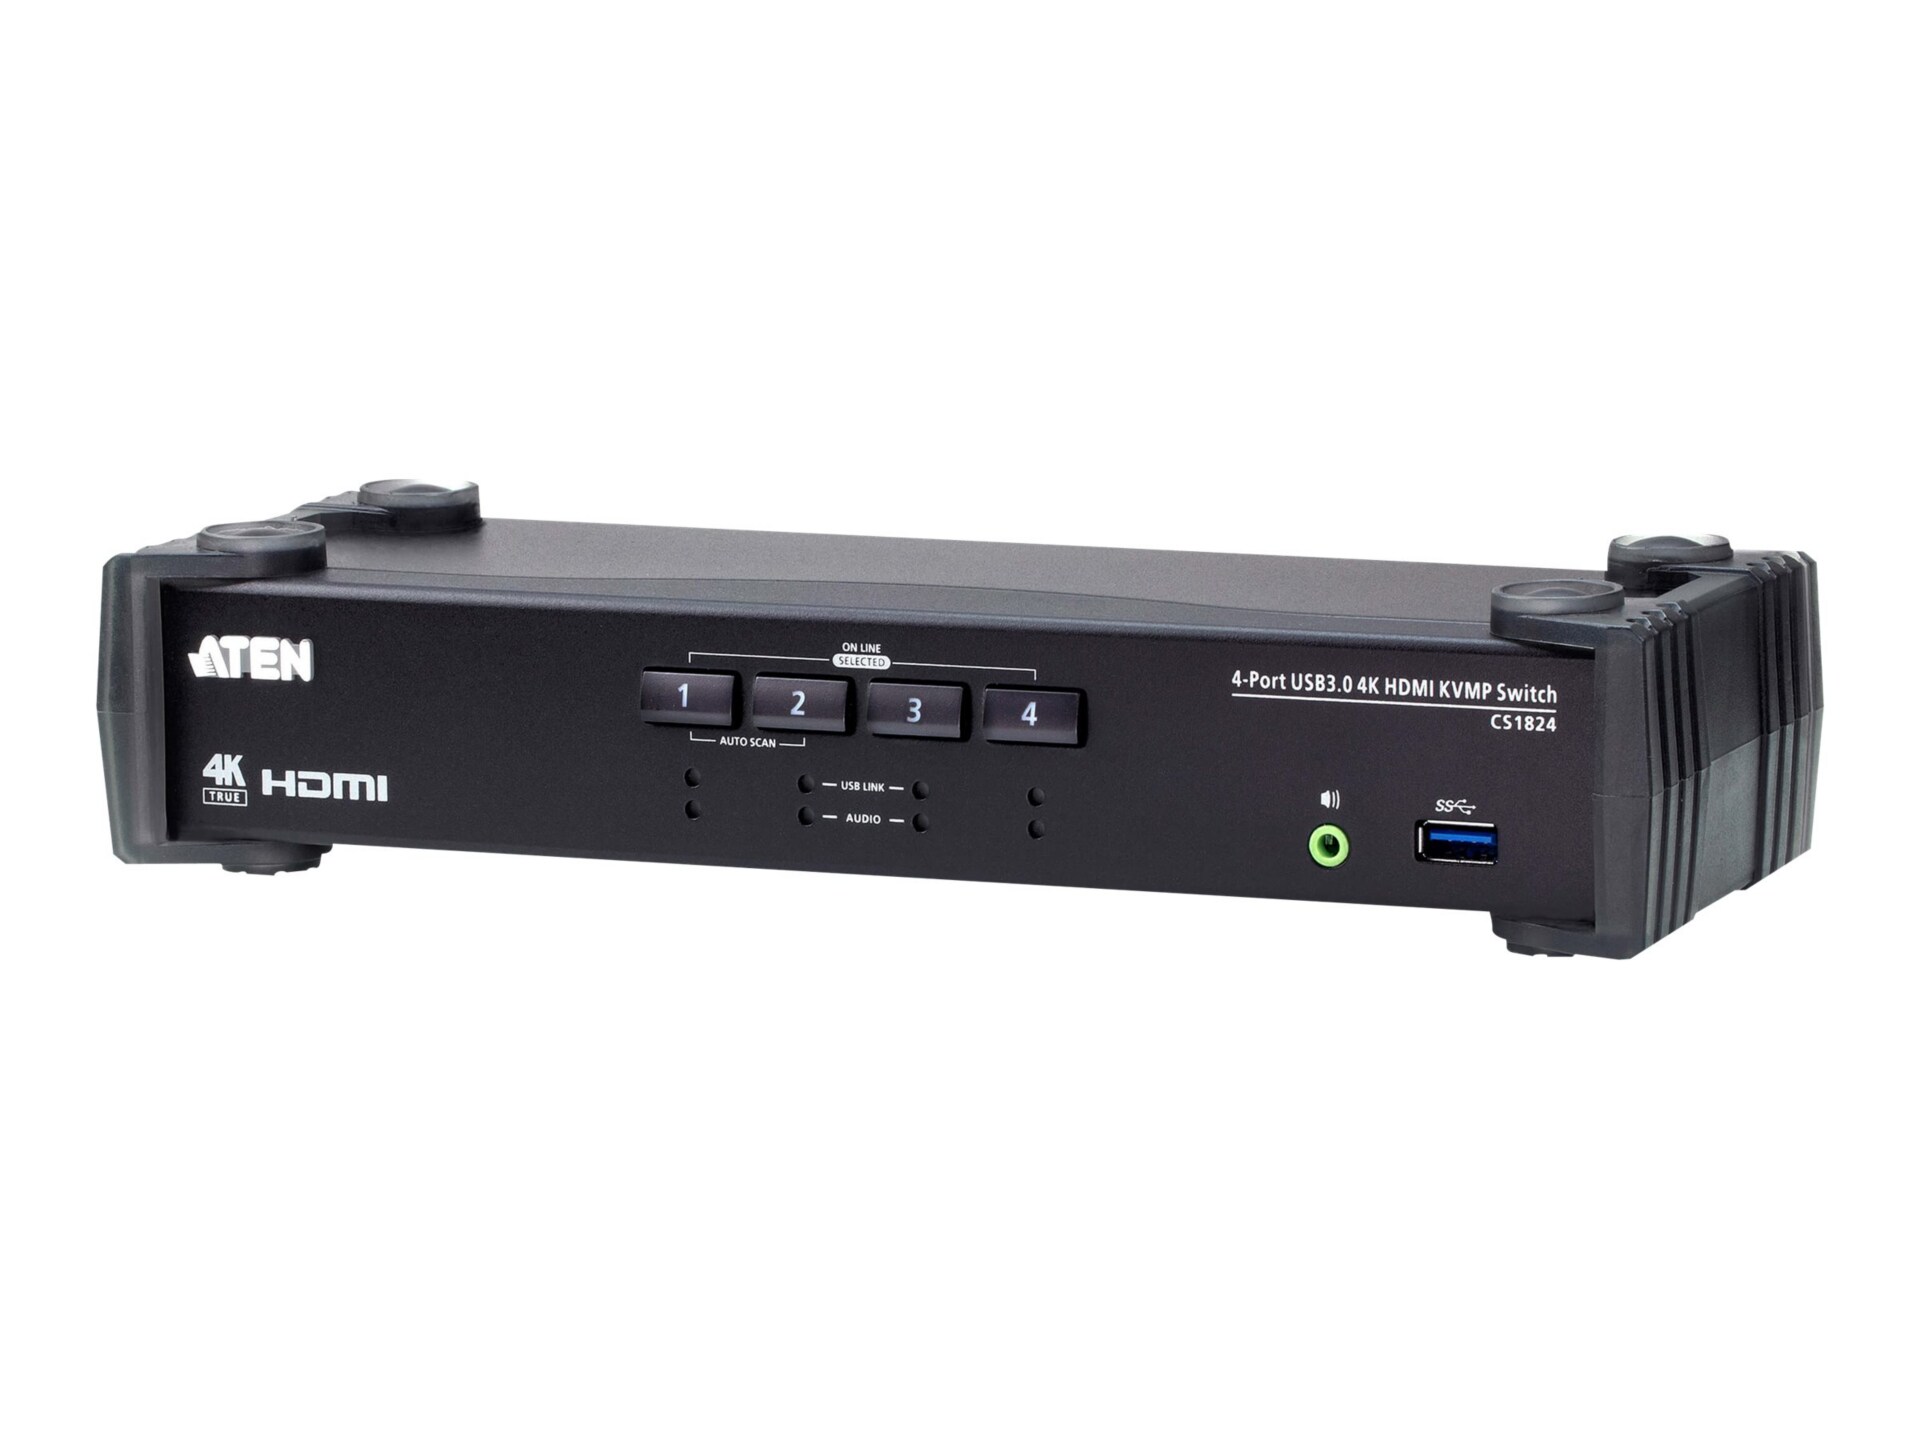 ATEN CS1824 KVMP Switch - KVM / audio / USB switch - 4 ports